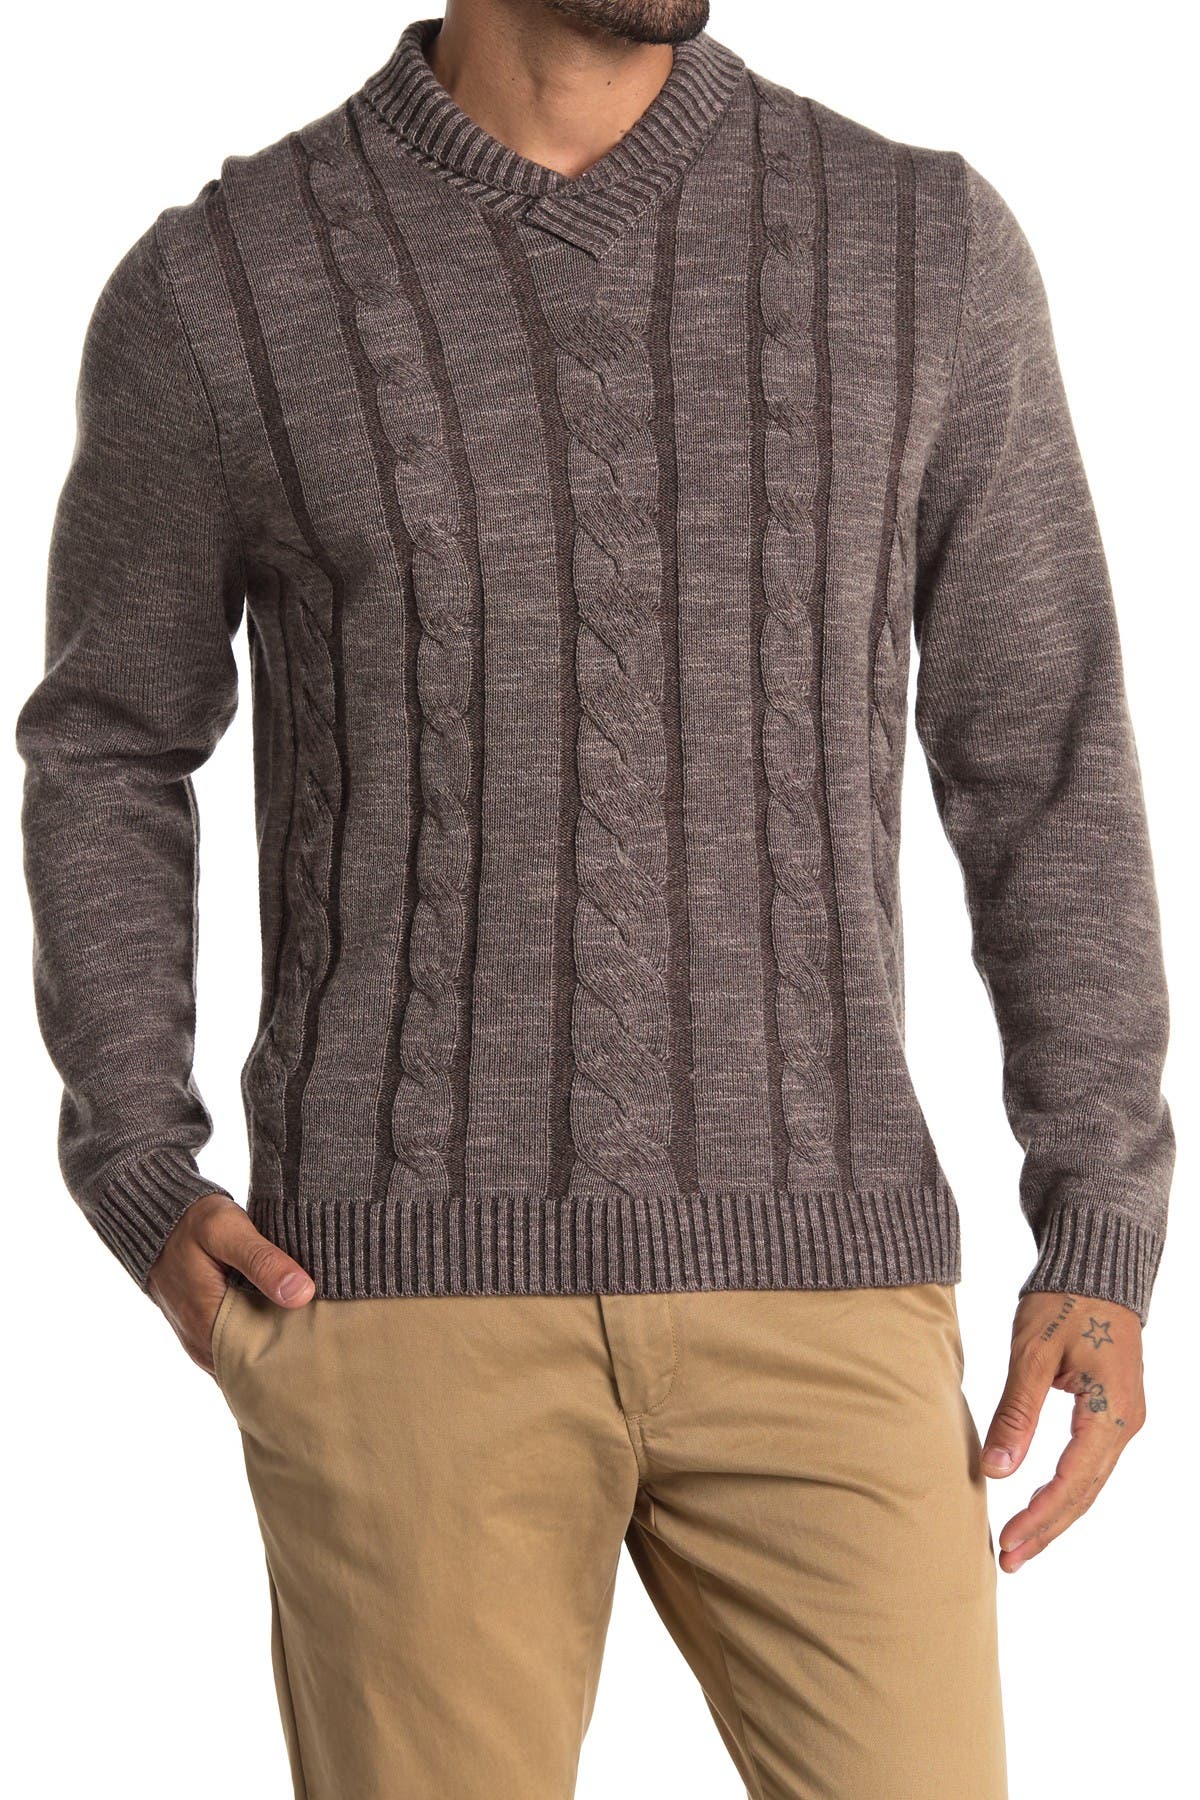 tommy bahama men's sweaters